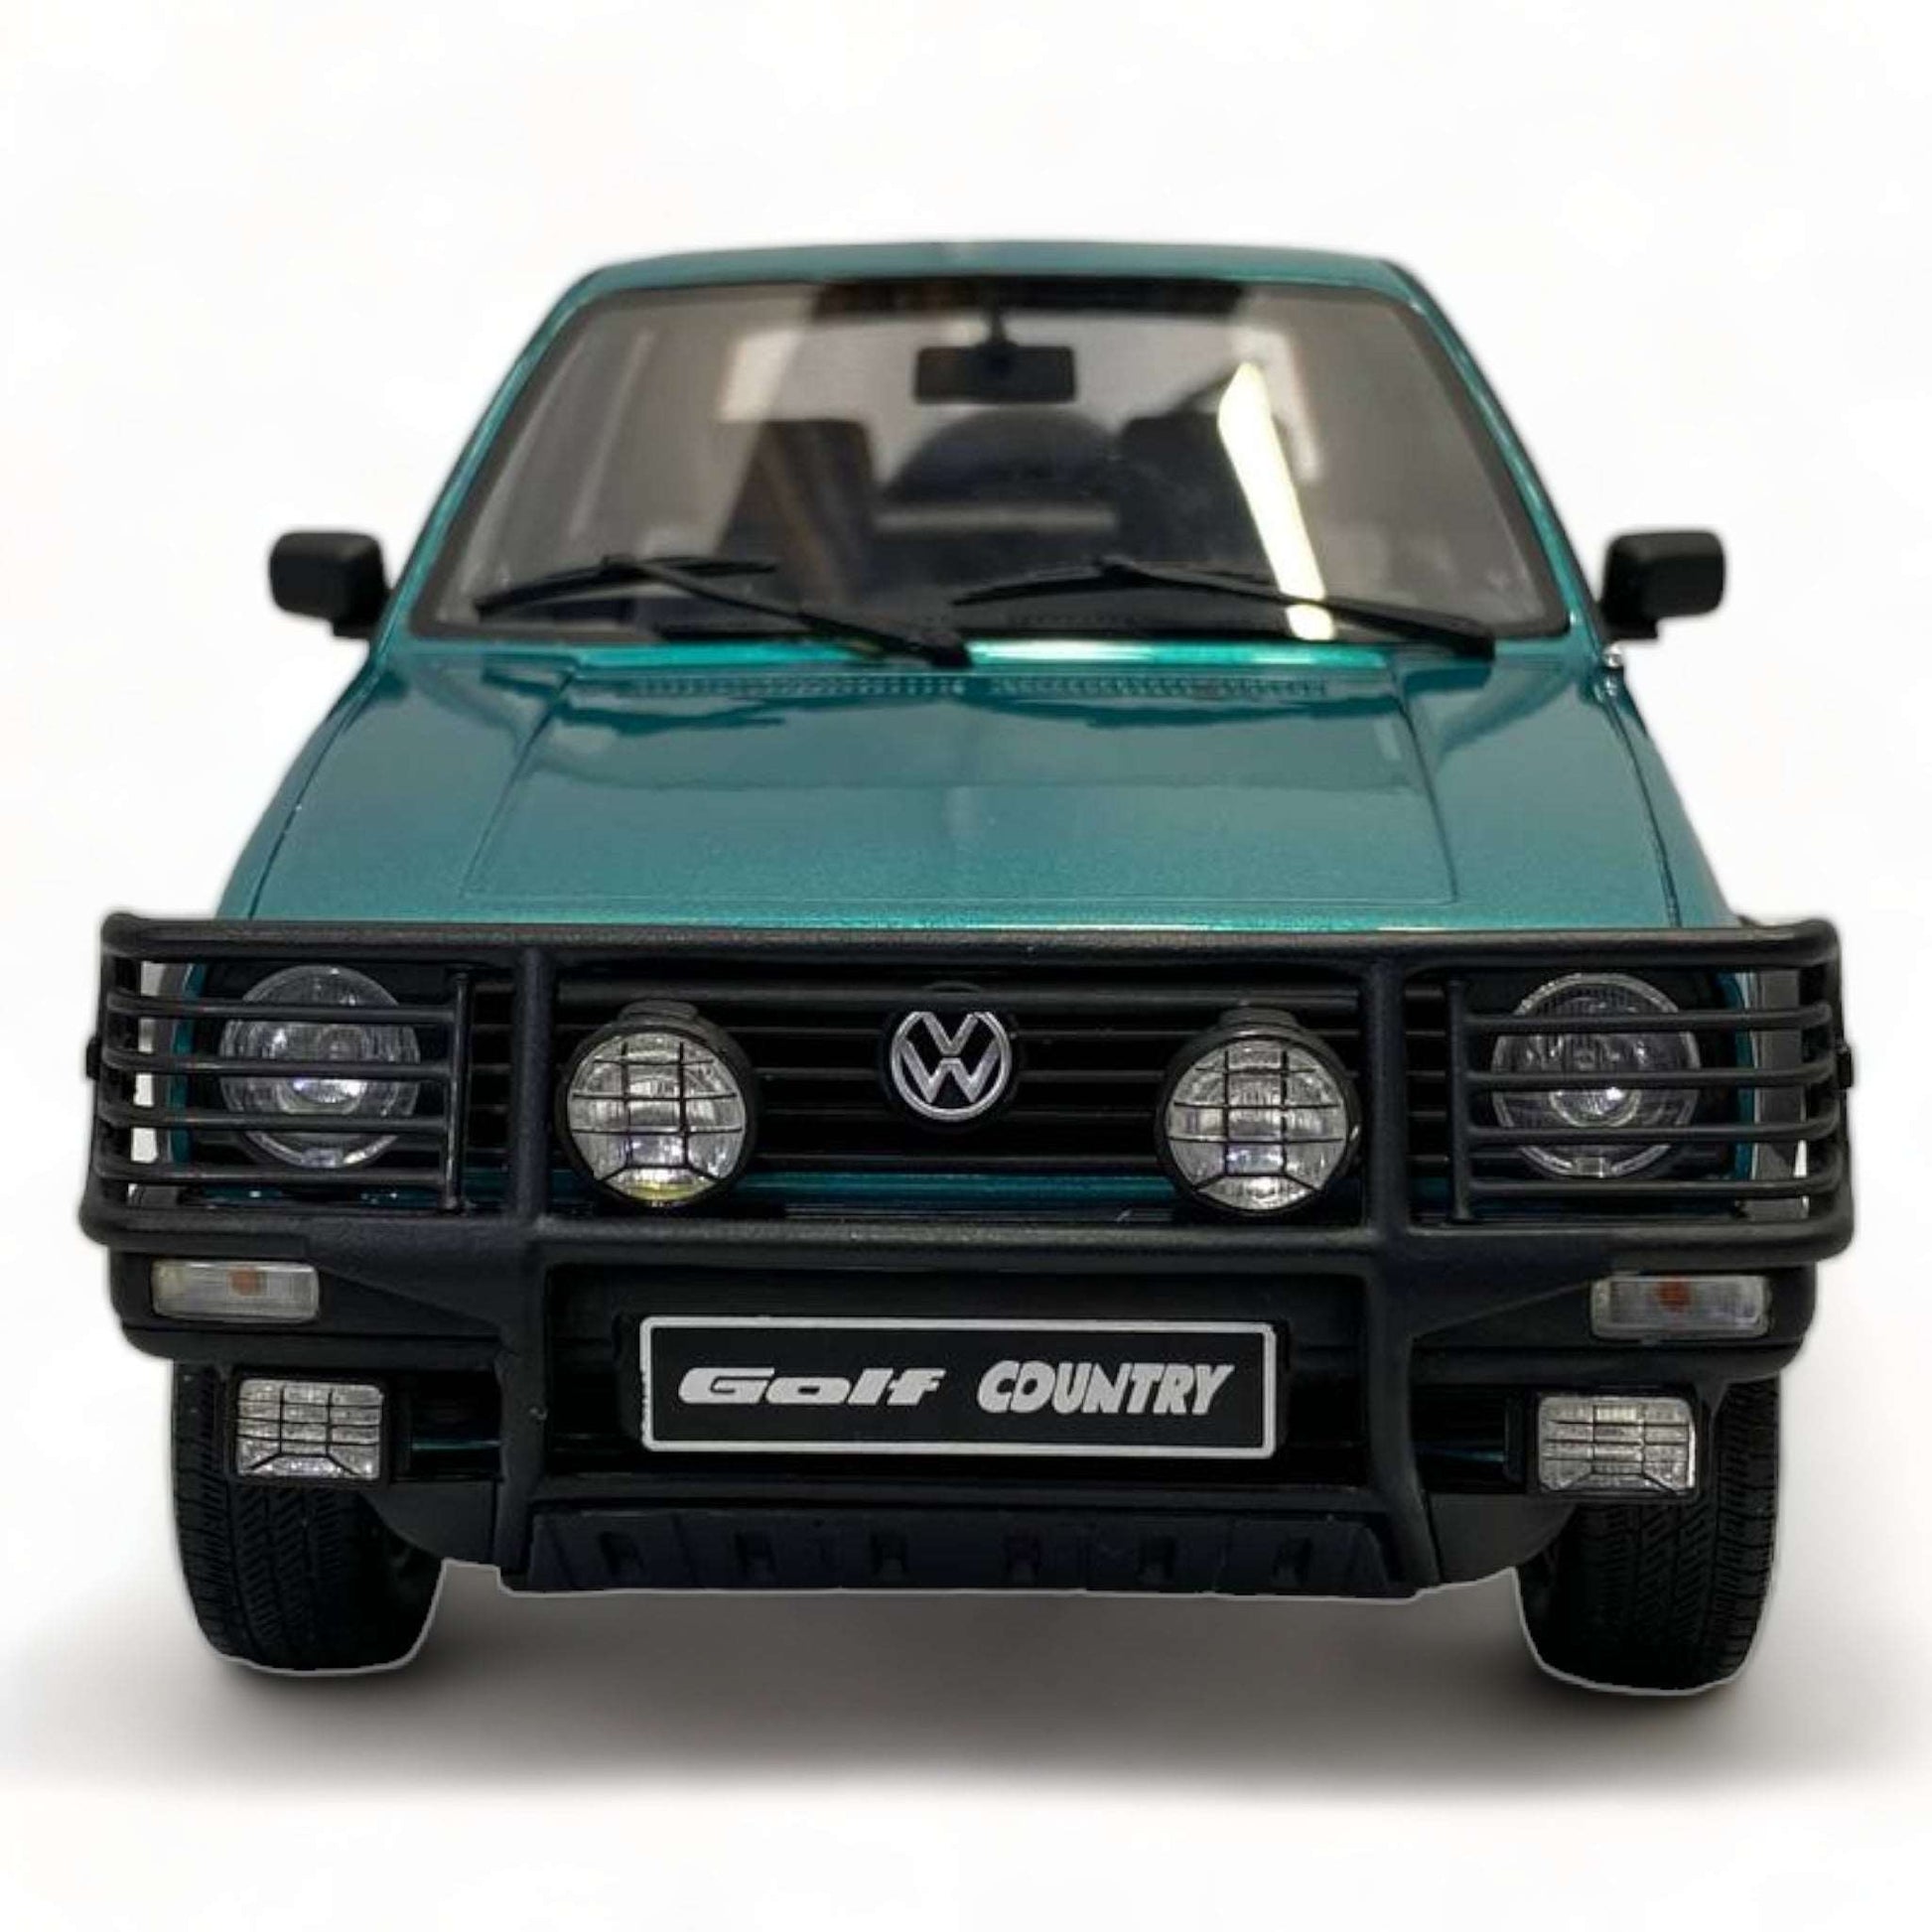 1/18 Diecast  OTTO Volkswagen Golf Country Models Miniature Car|Sold in Dturman.com Dubai UAE.